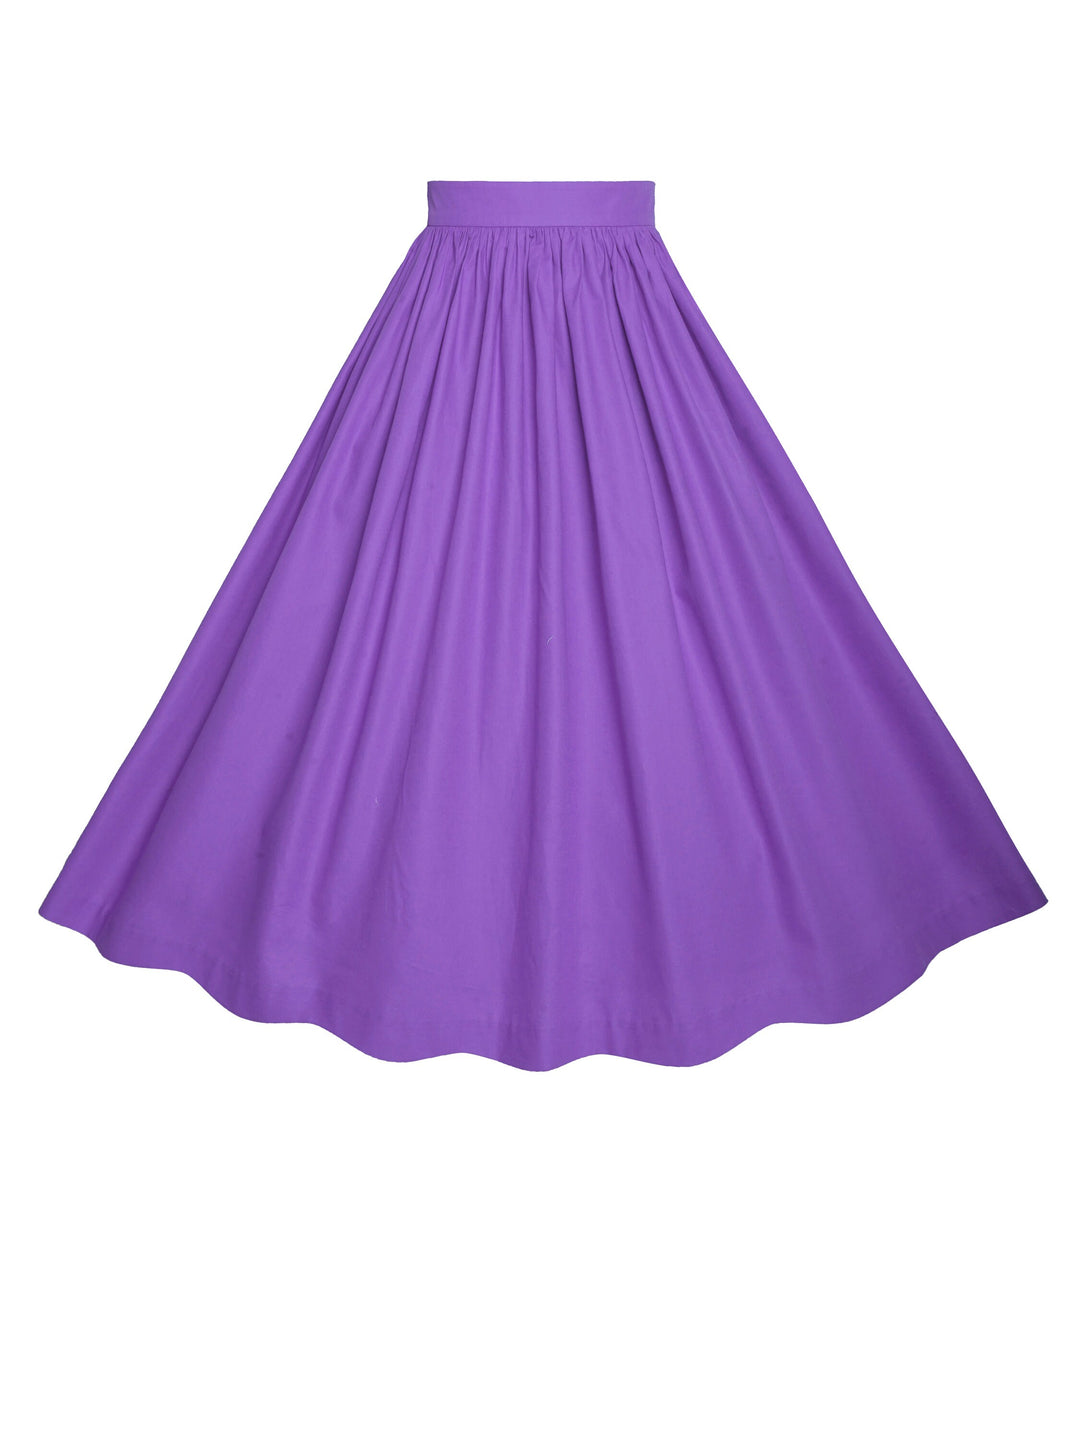 RTS - Size S - Lola Skirt in Amethyst Purple Cotton